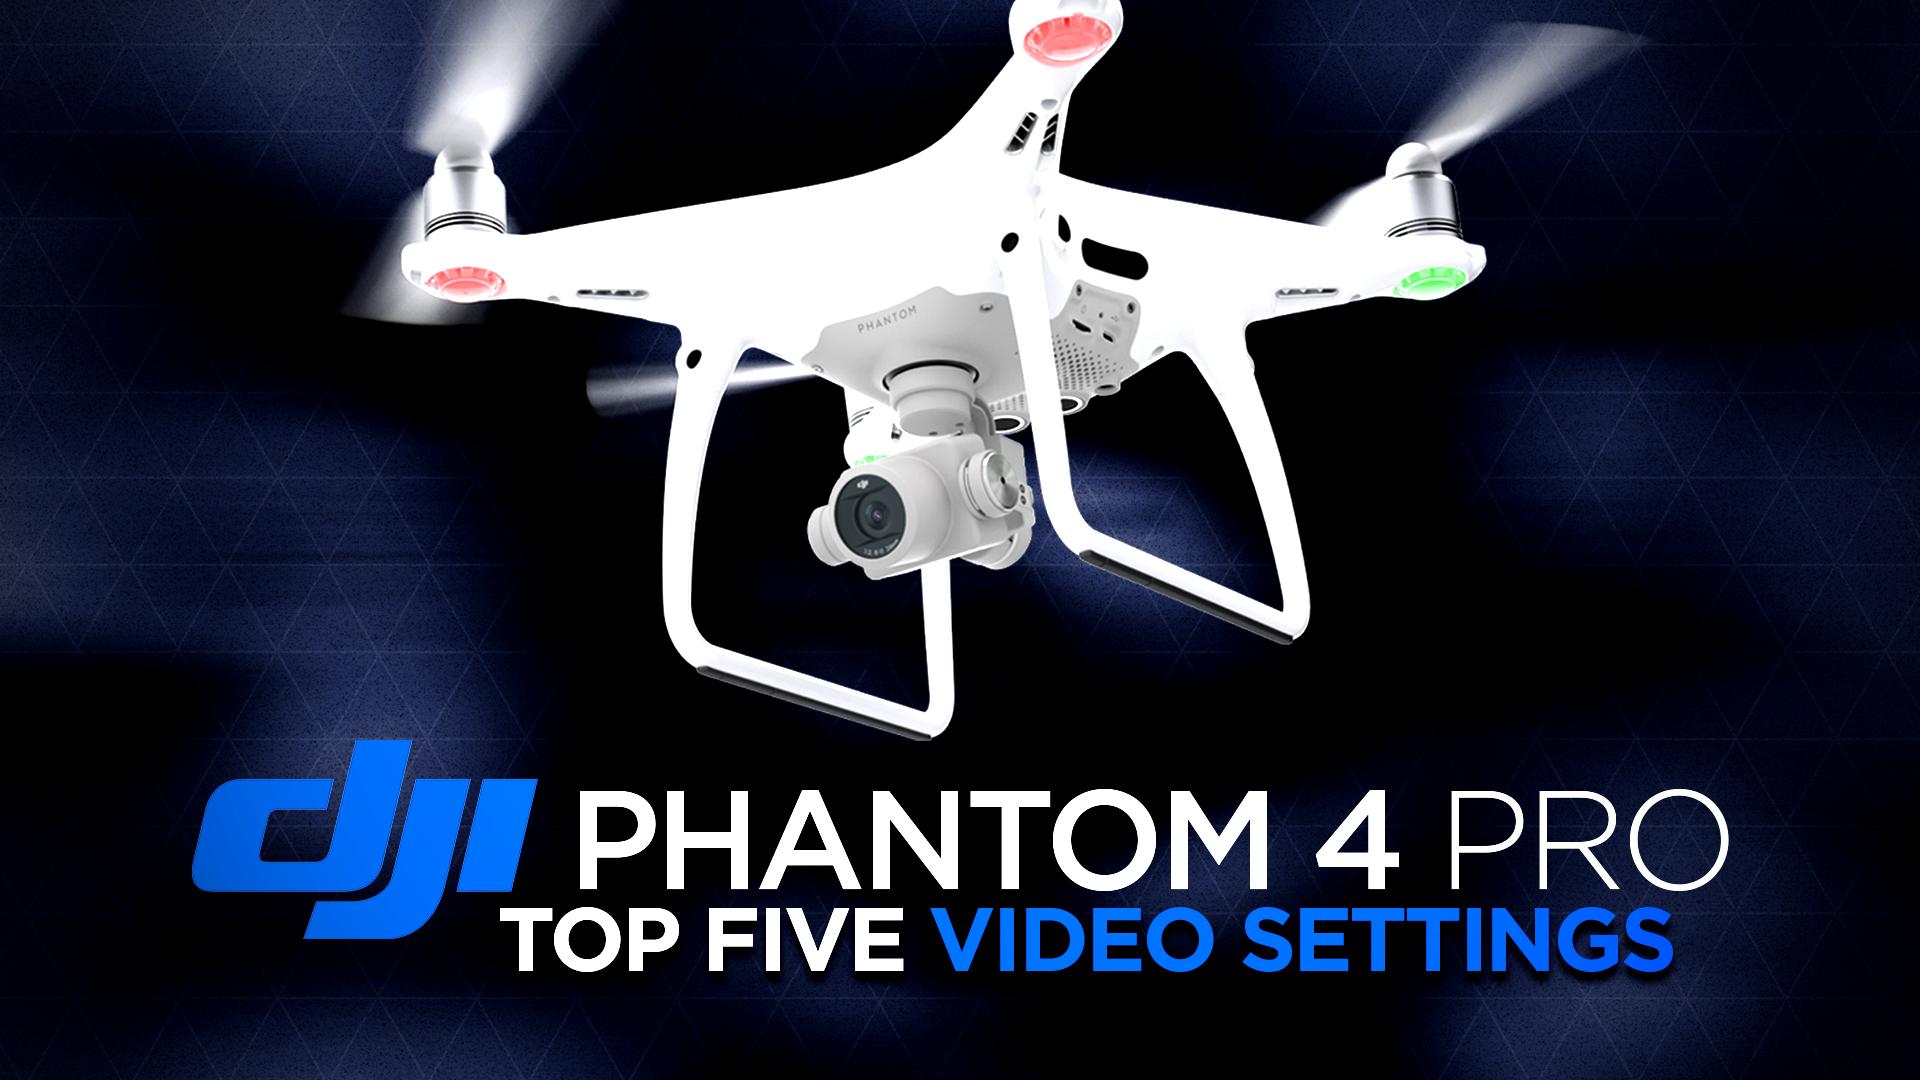 DJI Phantom 4 Pro Top Five Video Settings to Change - Daily Learn